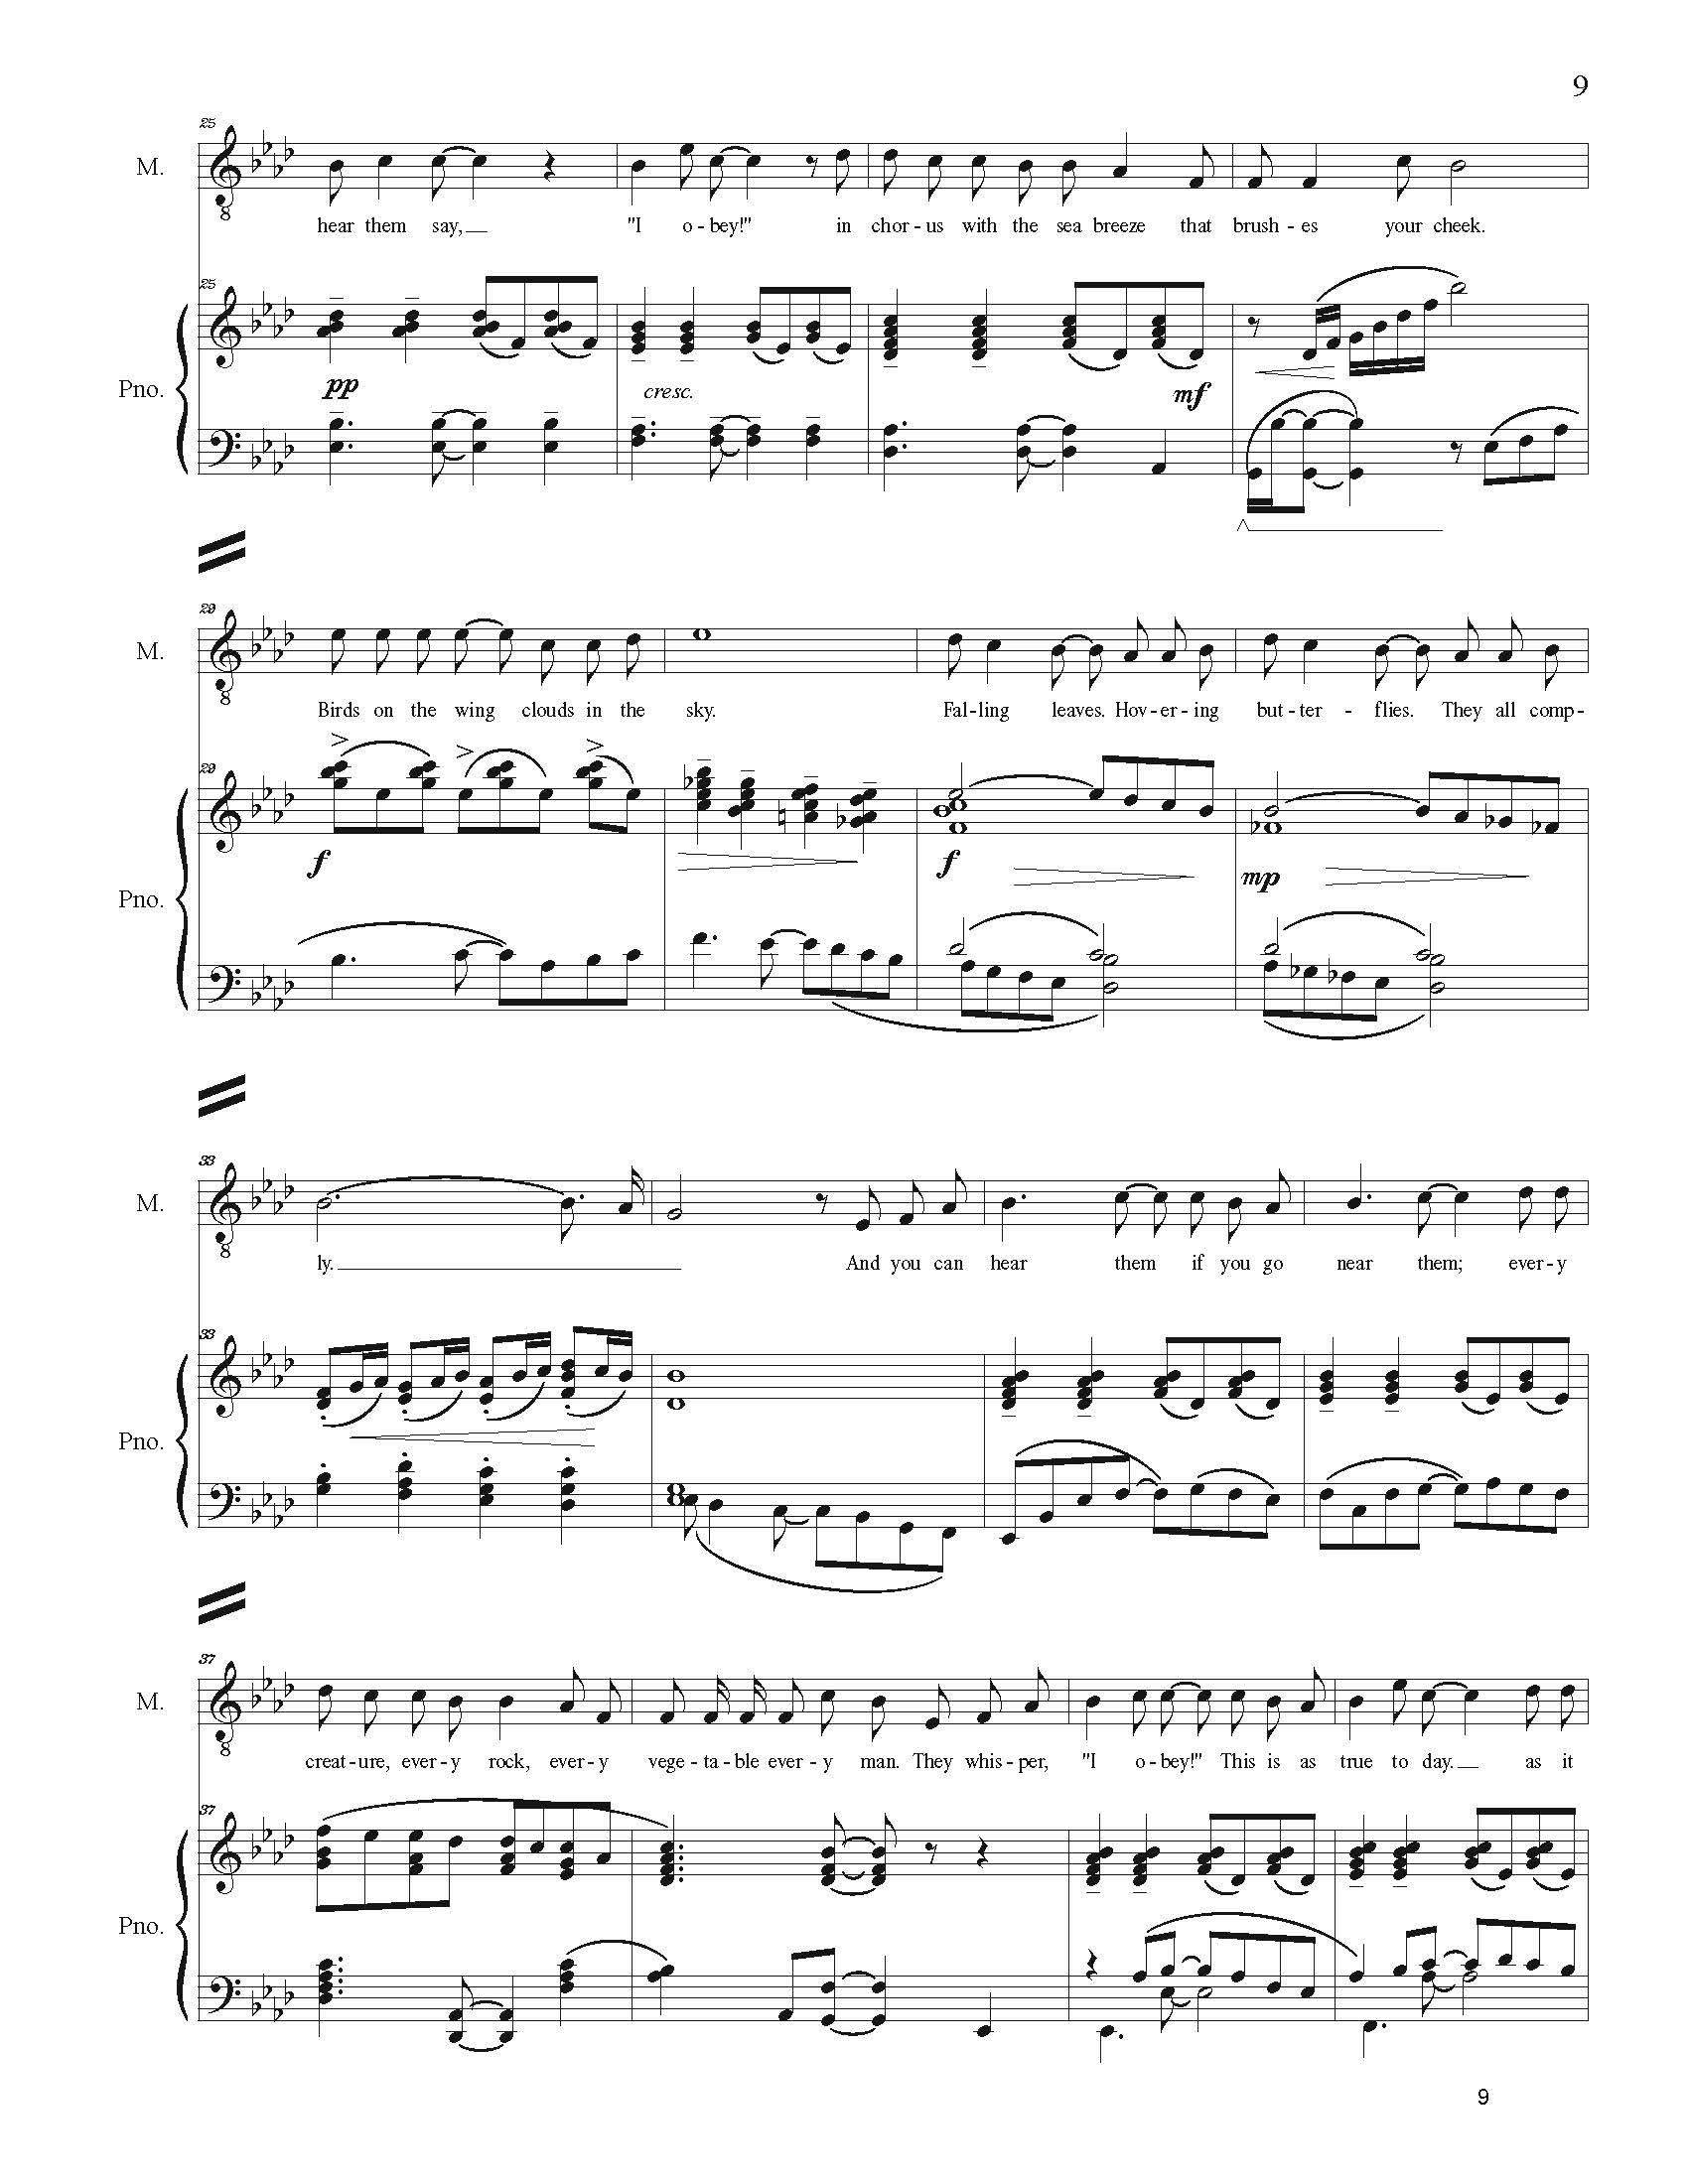 FULL PIANO VOCAL SCORE DRAFT 1 - Score_Page_009.jpg